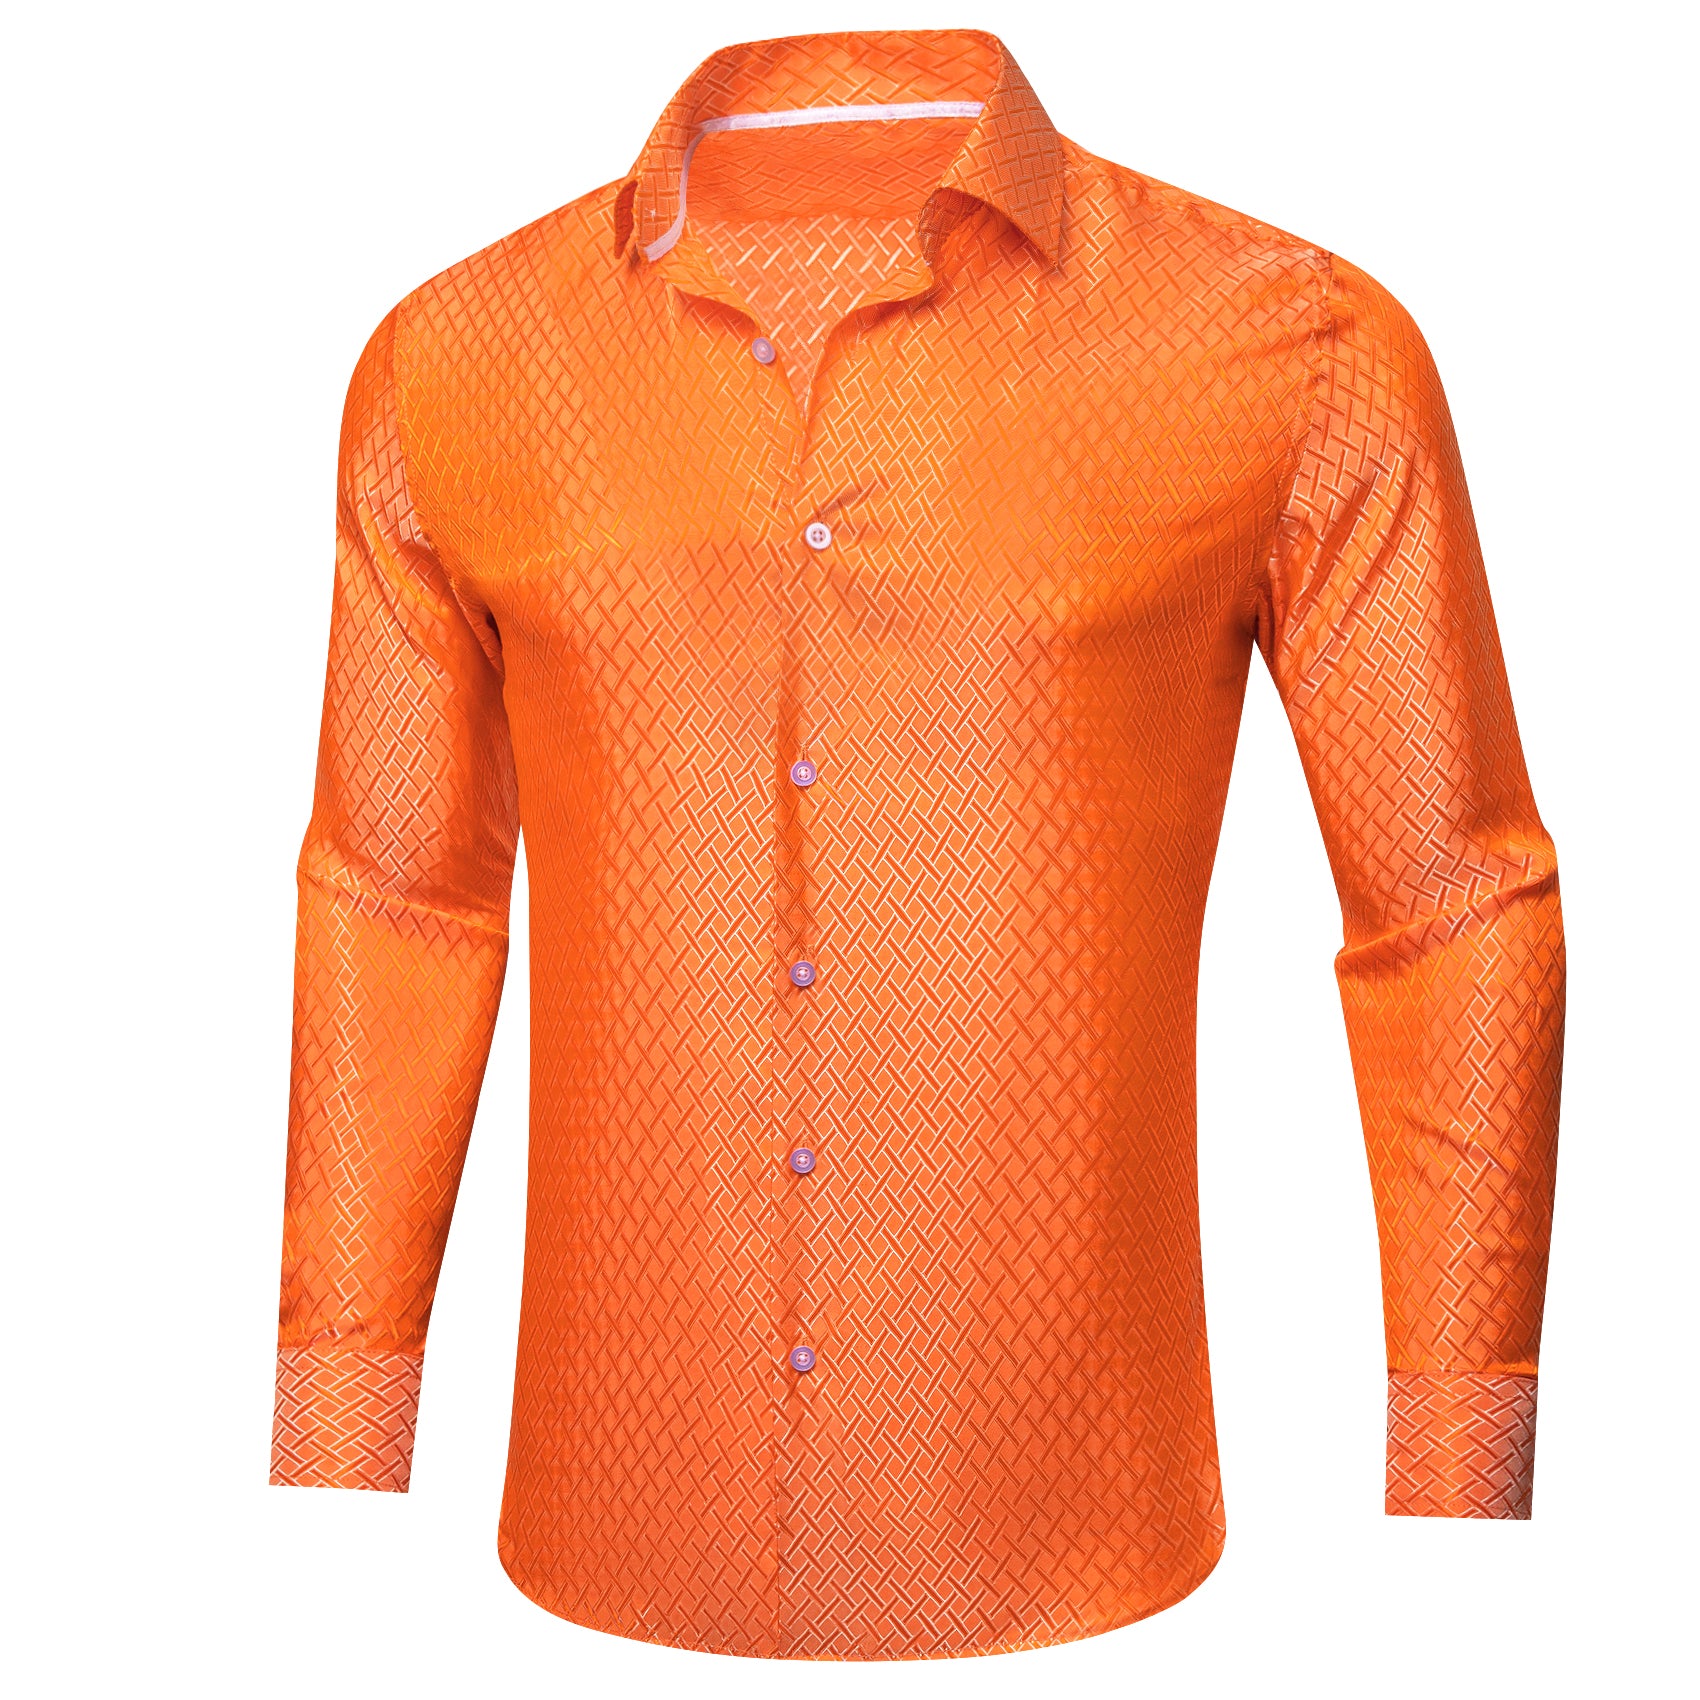 Barry.wang Orange Plaid Silk Men's Shirt